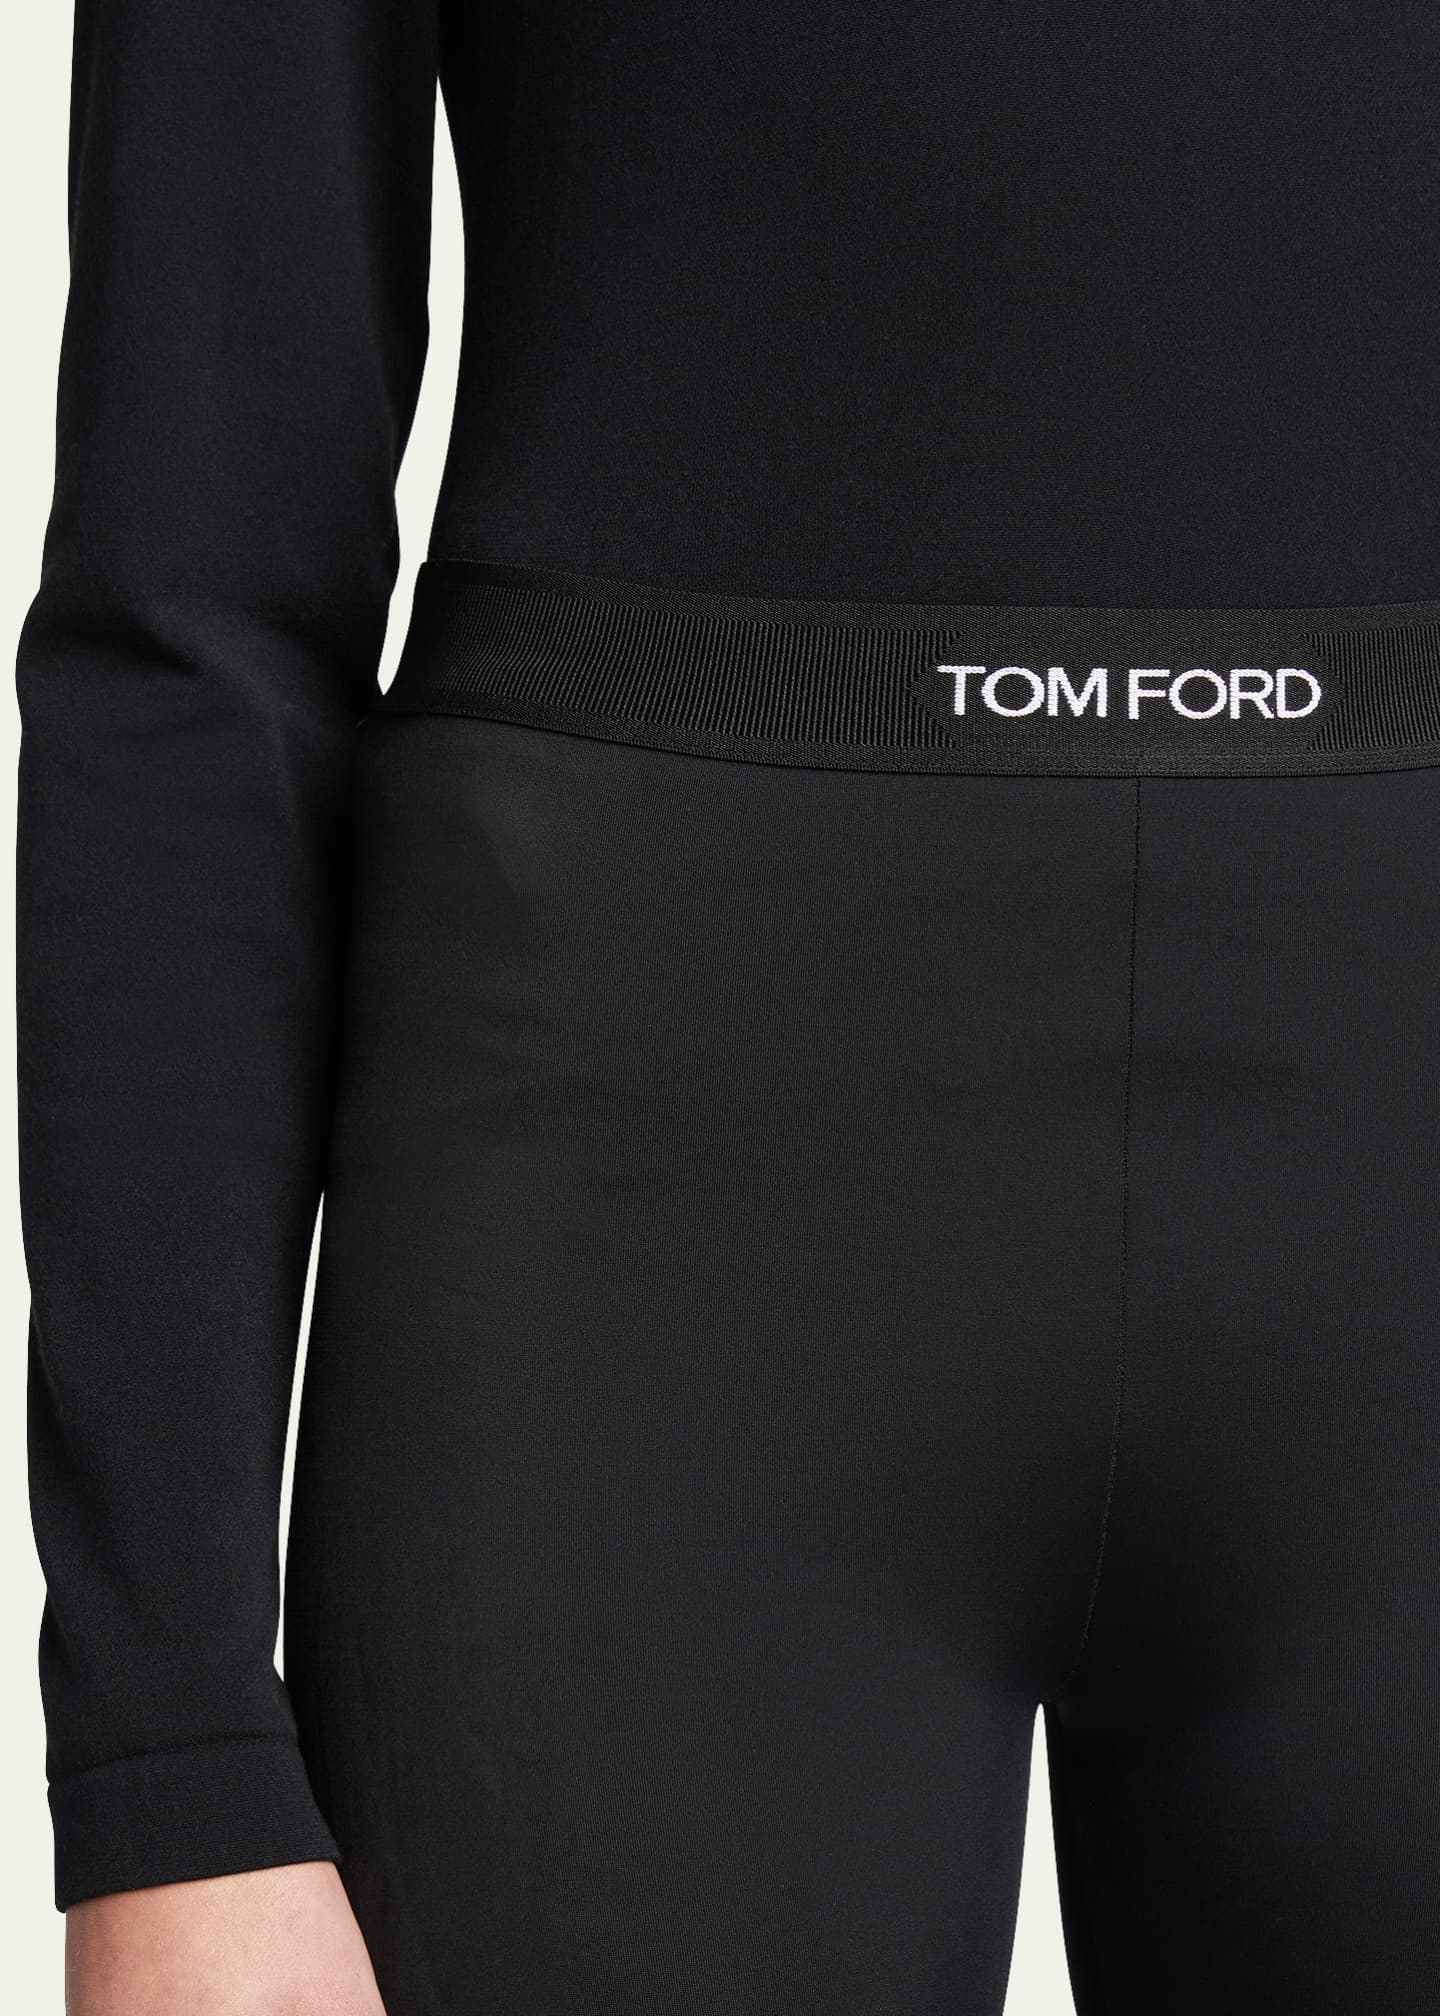 Score these Tom ford leggings for $157! Link in bio! #designerdeals #f